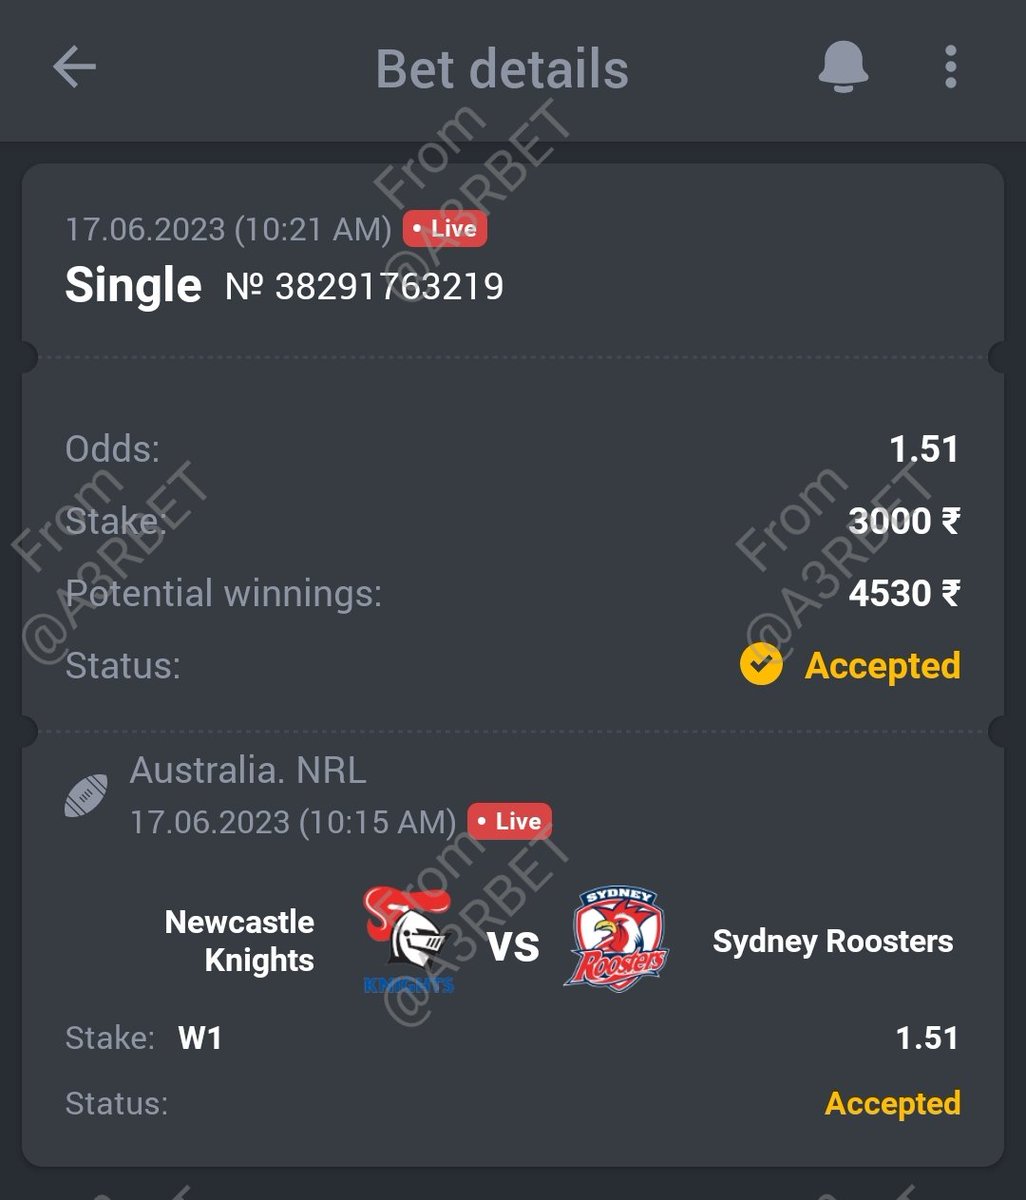 Rugby League - NRL

🏉 Newcastle Knights ML
🔖 1.50
💵 20 Units

#GamblingTwitter #SportsBetting #TeamParieur #SportsBet #Betting #FreePicks #A3RBET #SportsBettor

#RugbyLeague #NRL #NRL23 #NRLTwitter #Australia #Aussie #DefendTheKingdom #NRLKnightsRoosters

Like + RT